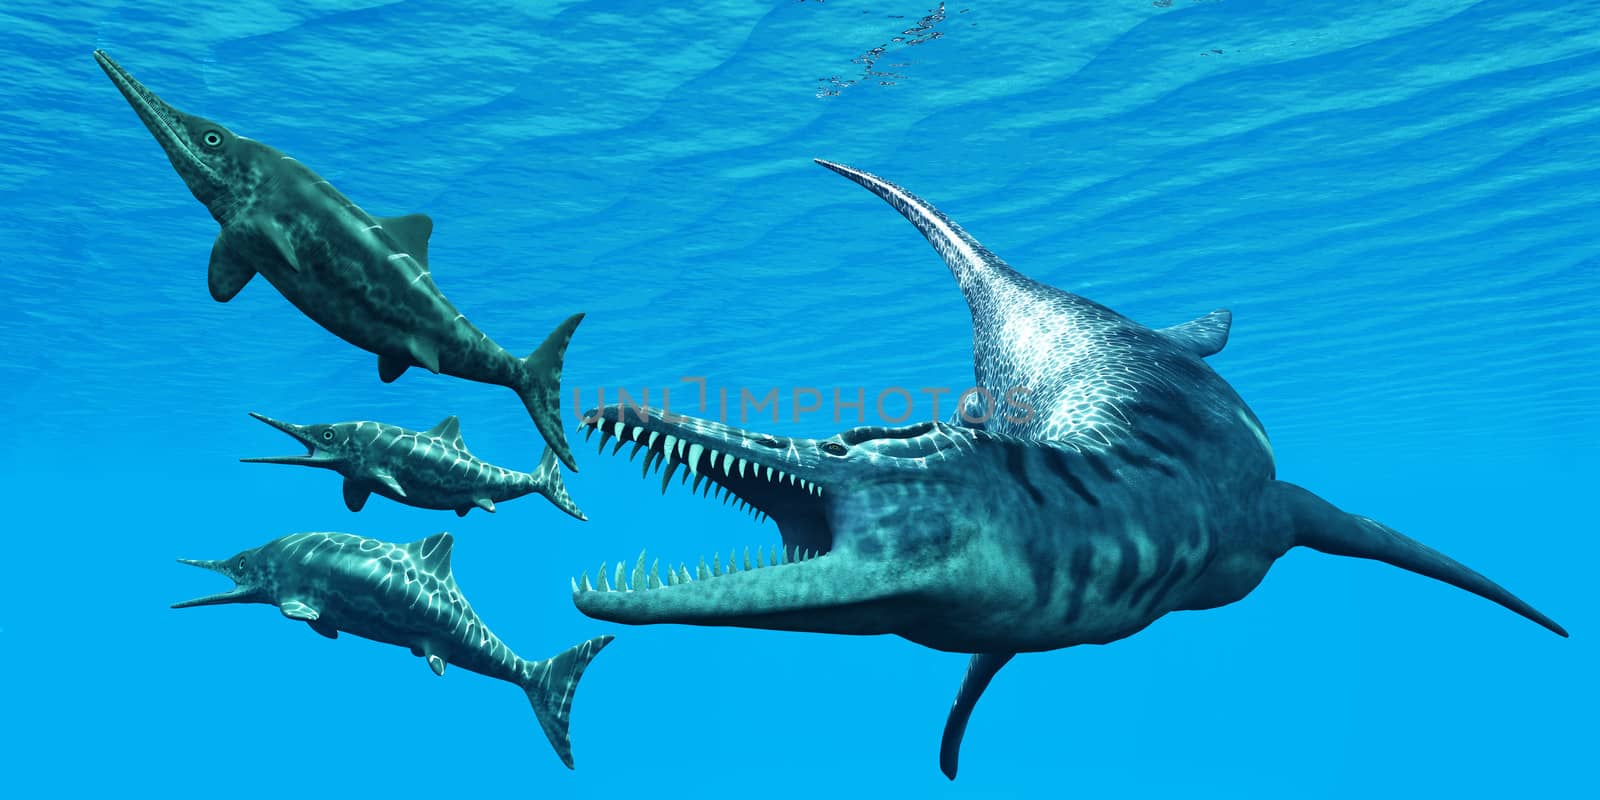 Liopleurodon attacks Ichthyosaurus by Catmando